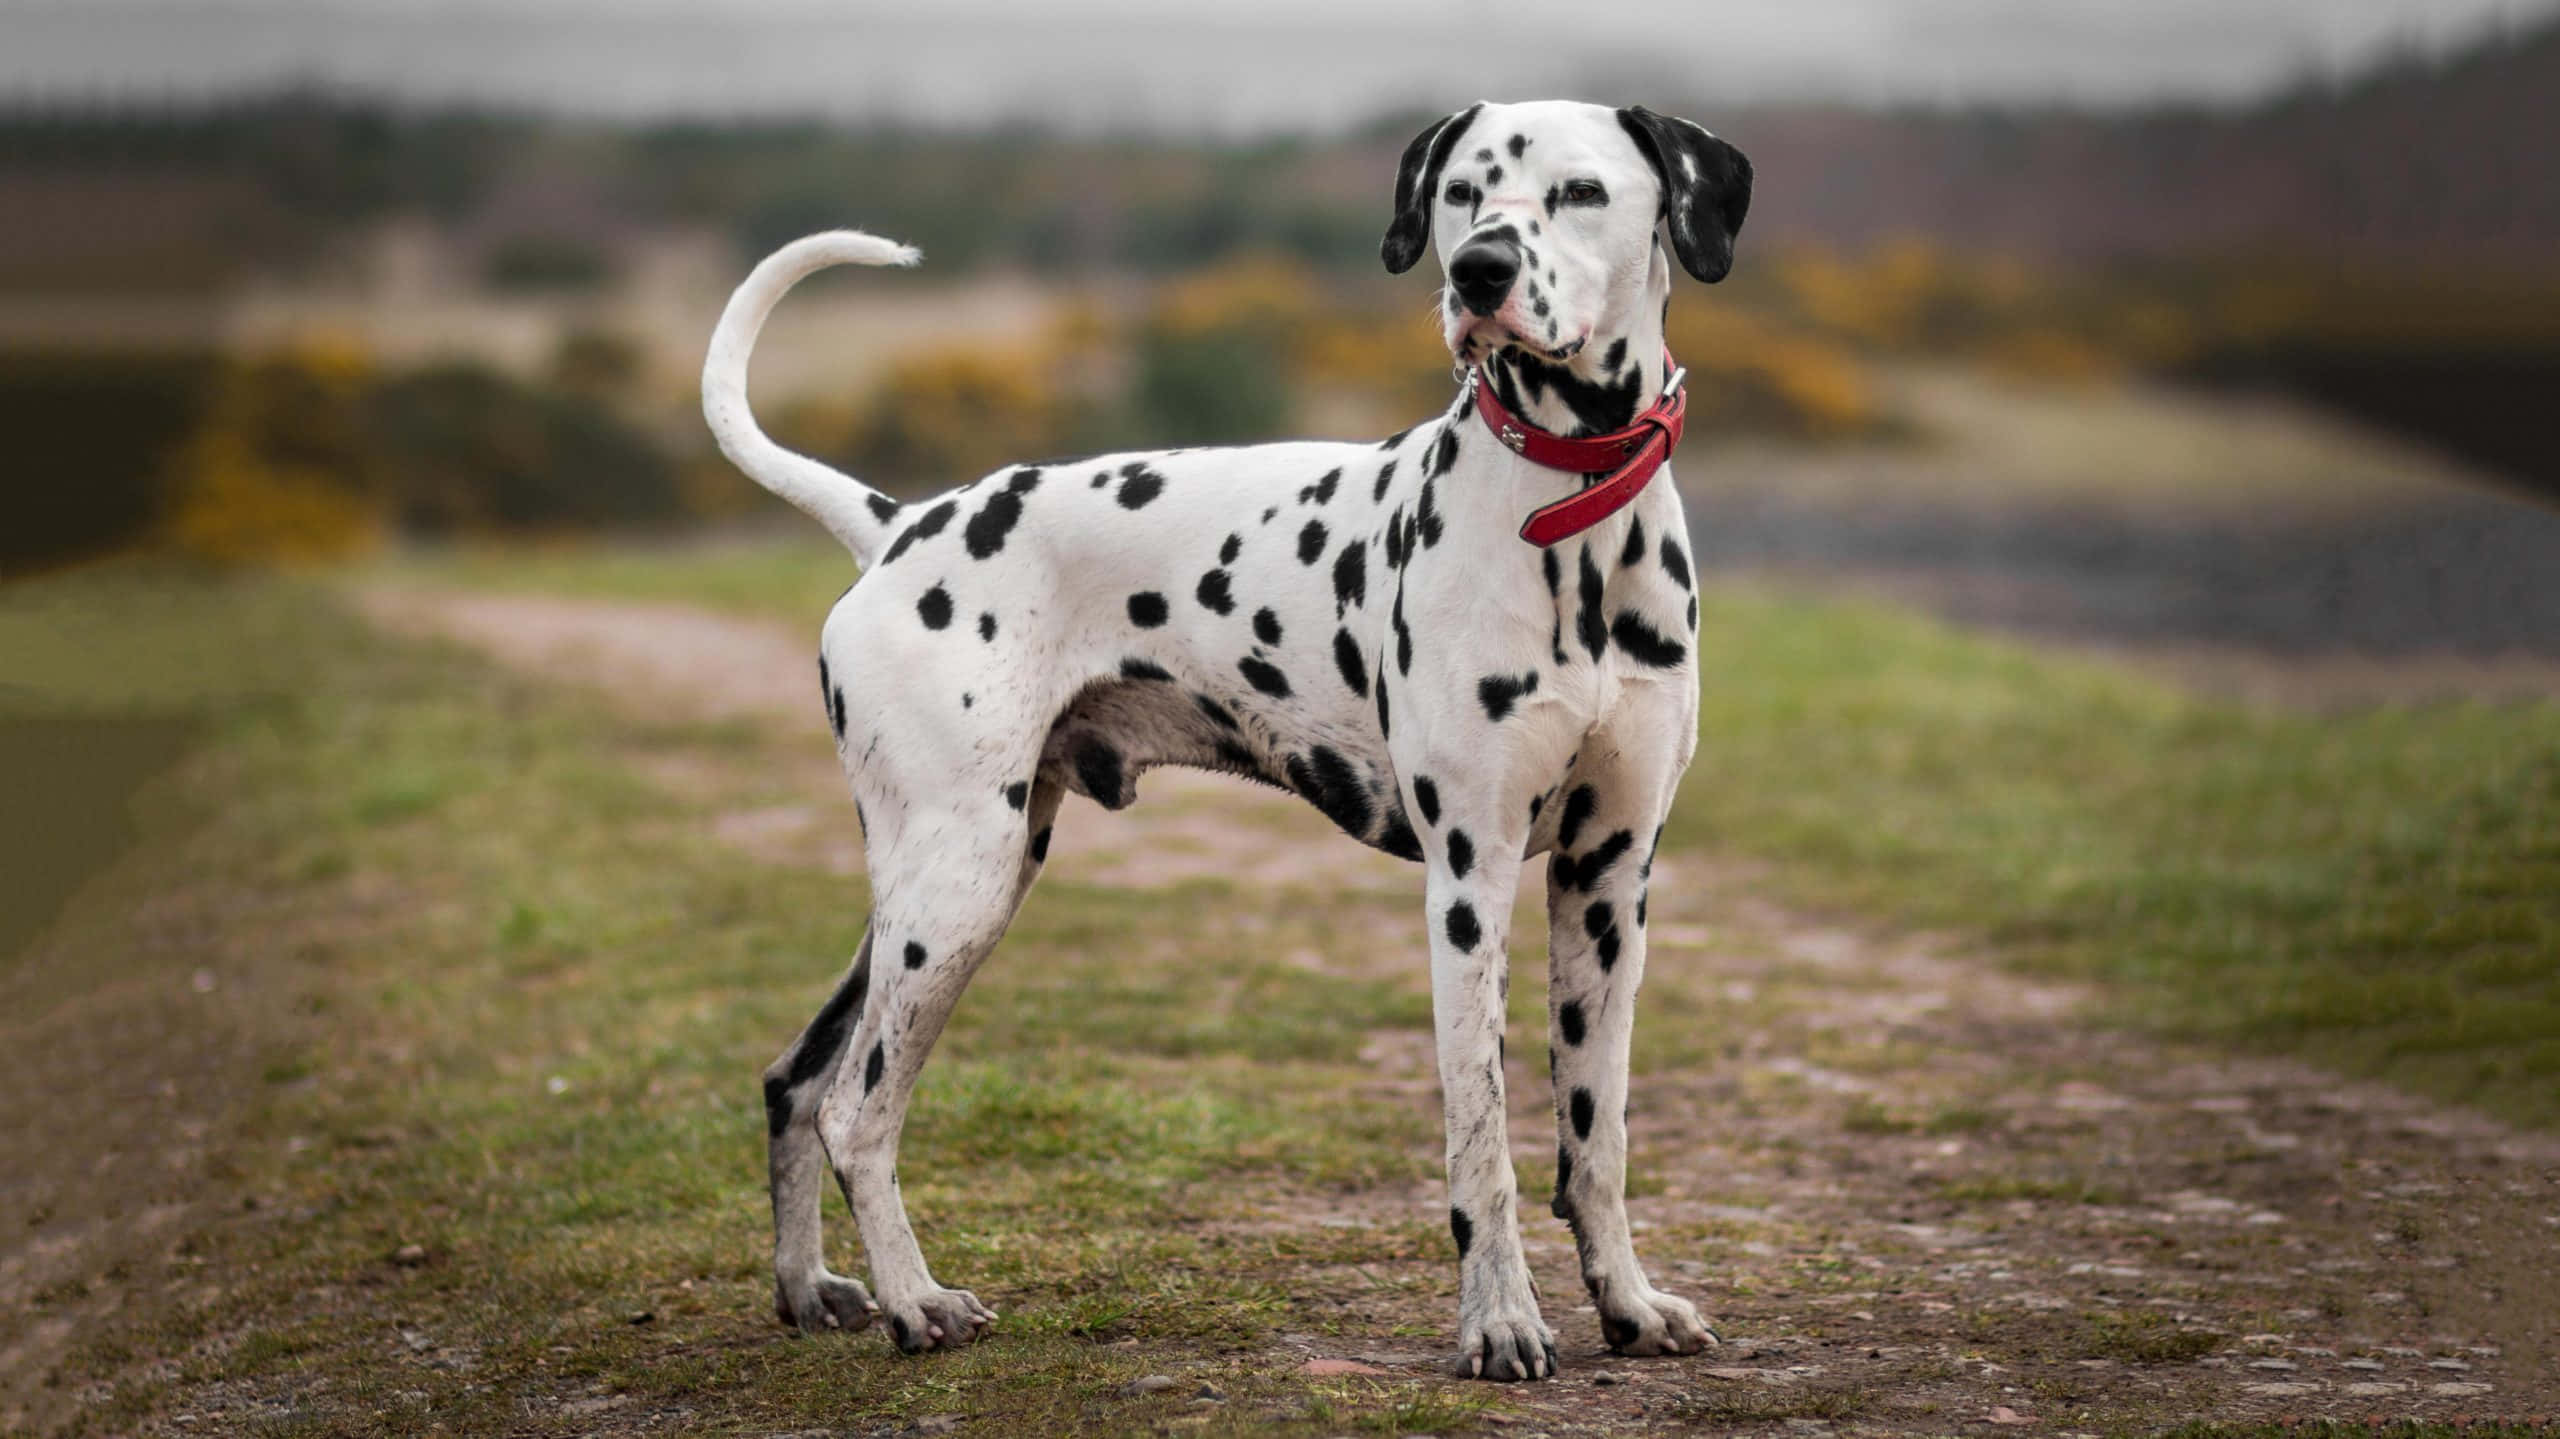 Modigoch Tapper - En Dalmatinerhund I All Sin Prakt